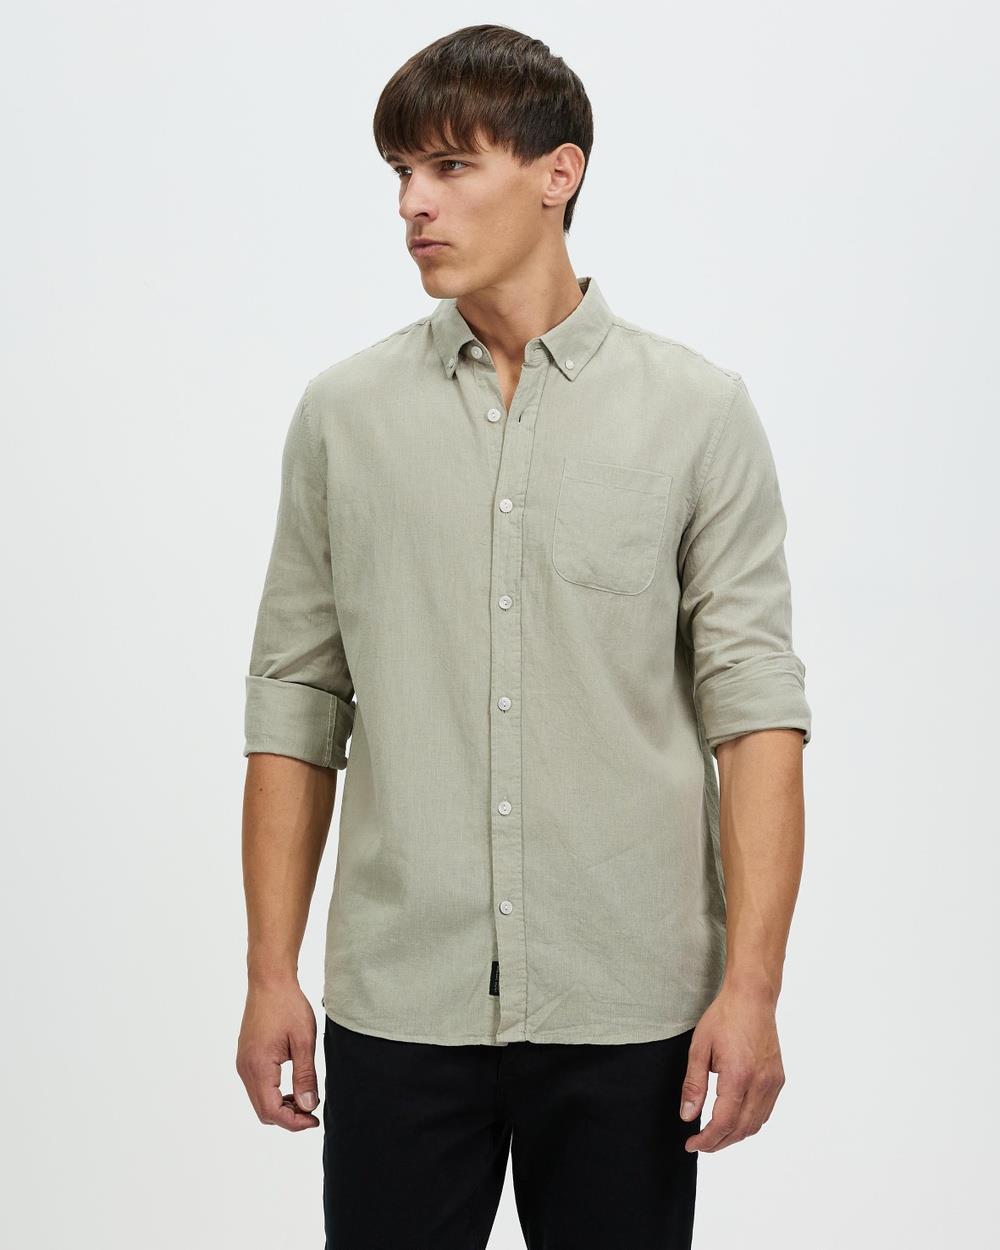 Staple Superior - Hamilton Linen Blend LS Shirt - Casual shirts (Sage) Hamilton Linen Blend LS Shirt